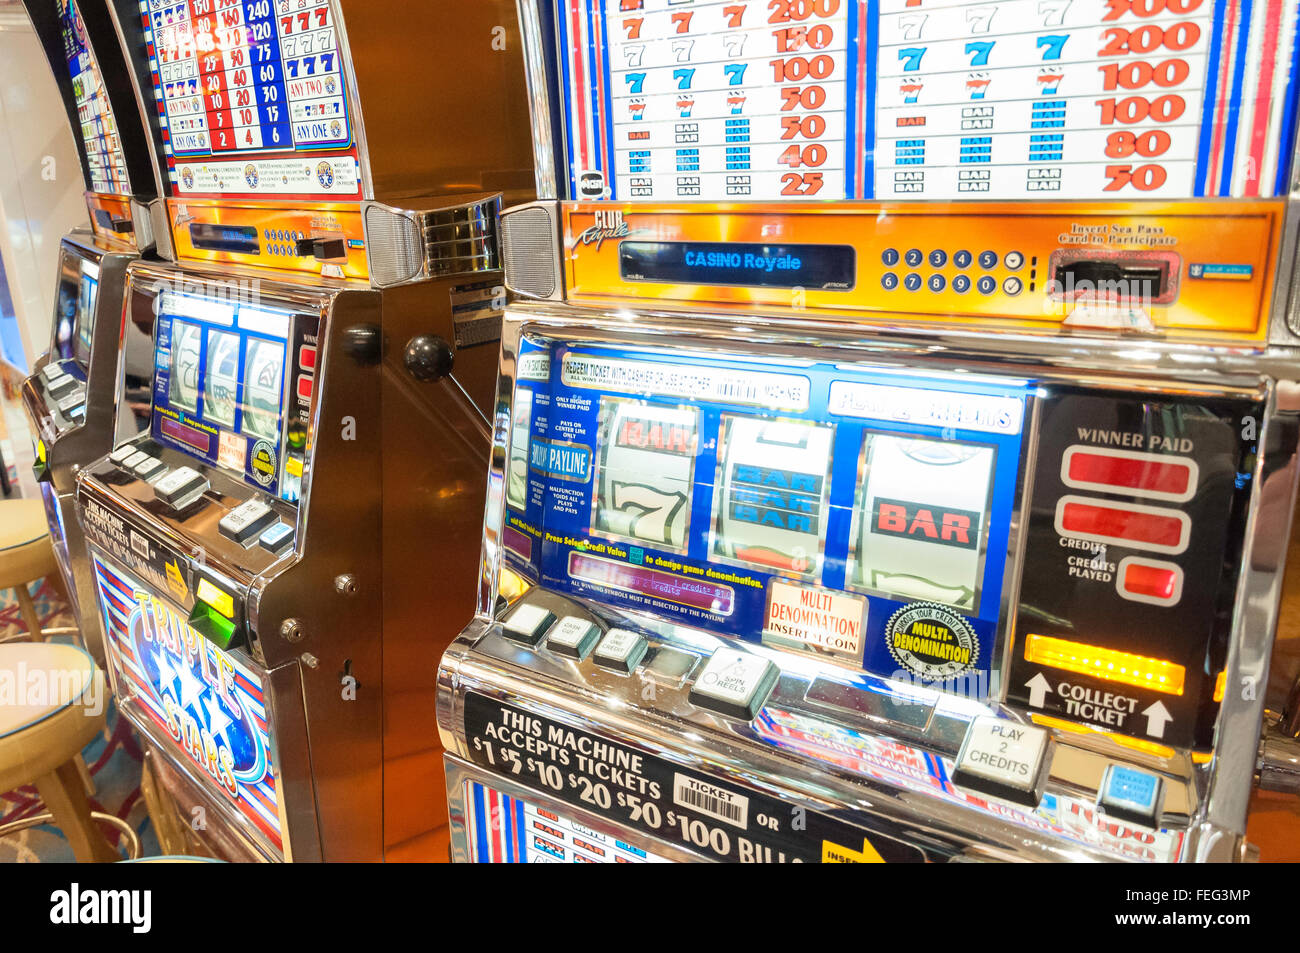 Spielautomaten im Casino an Bord von Royal Caribbean "Brilliance of the Seas" Kreuzfahrtschiff, Mittelmeer, Europa Stockfoto